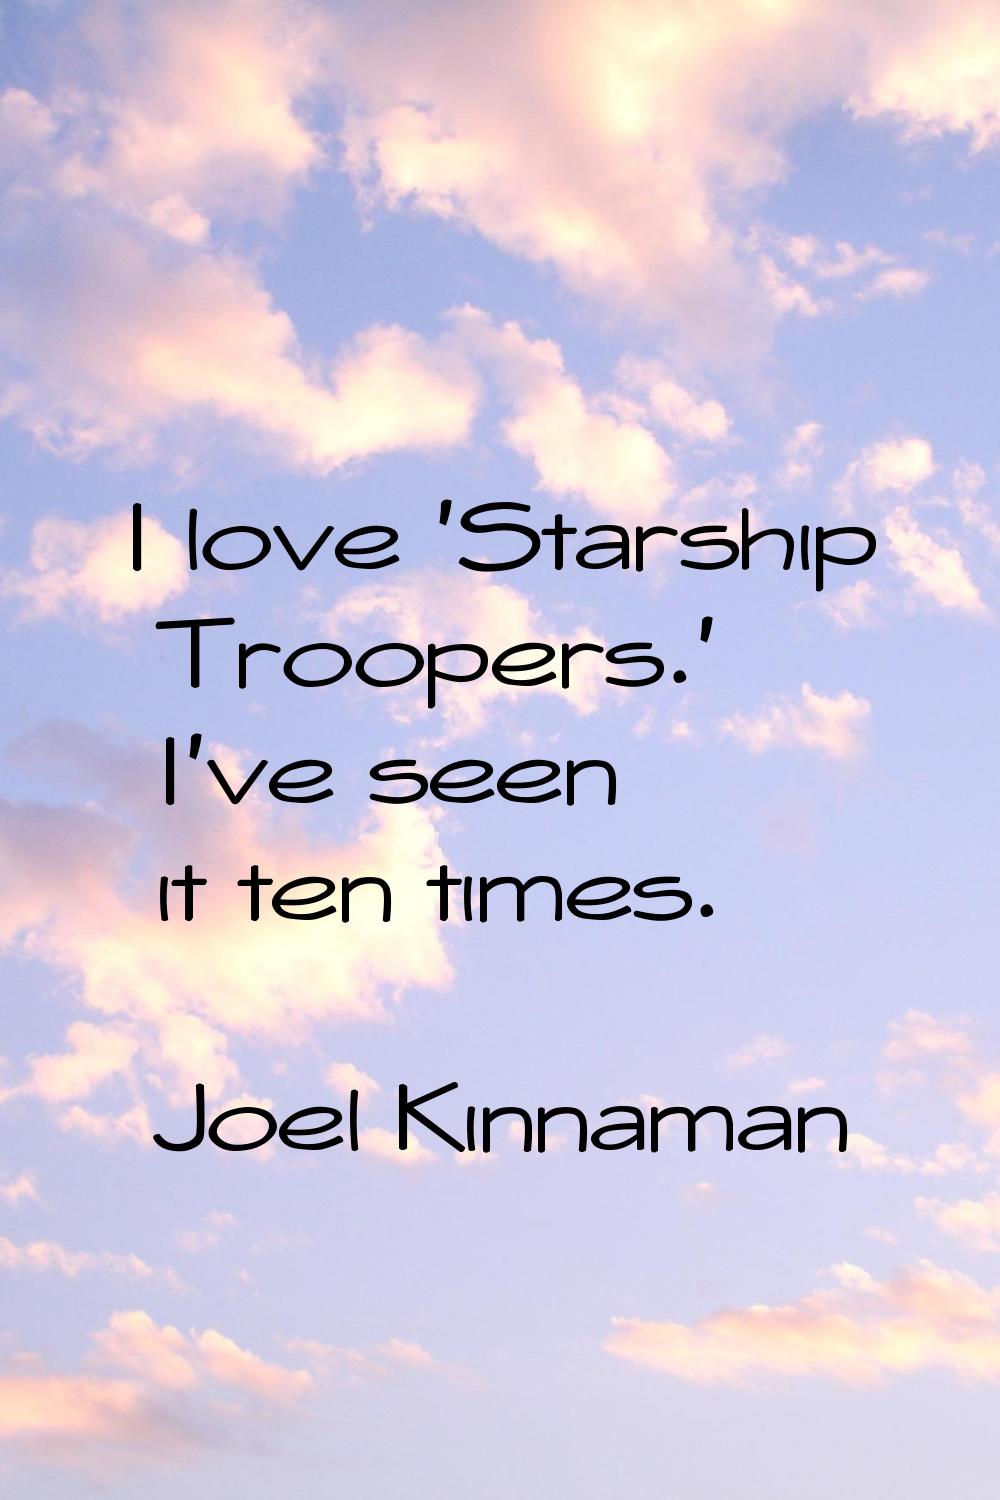 I love 'Starship Troopers.' I've seen it ten times.